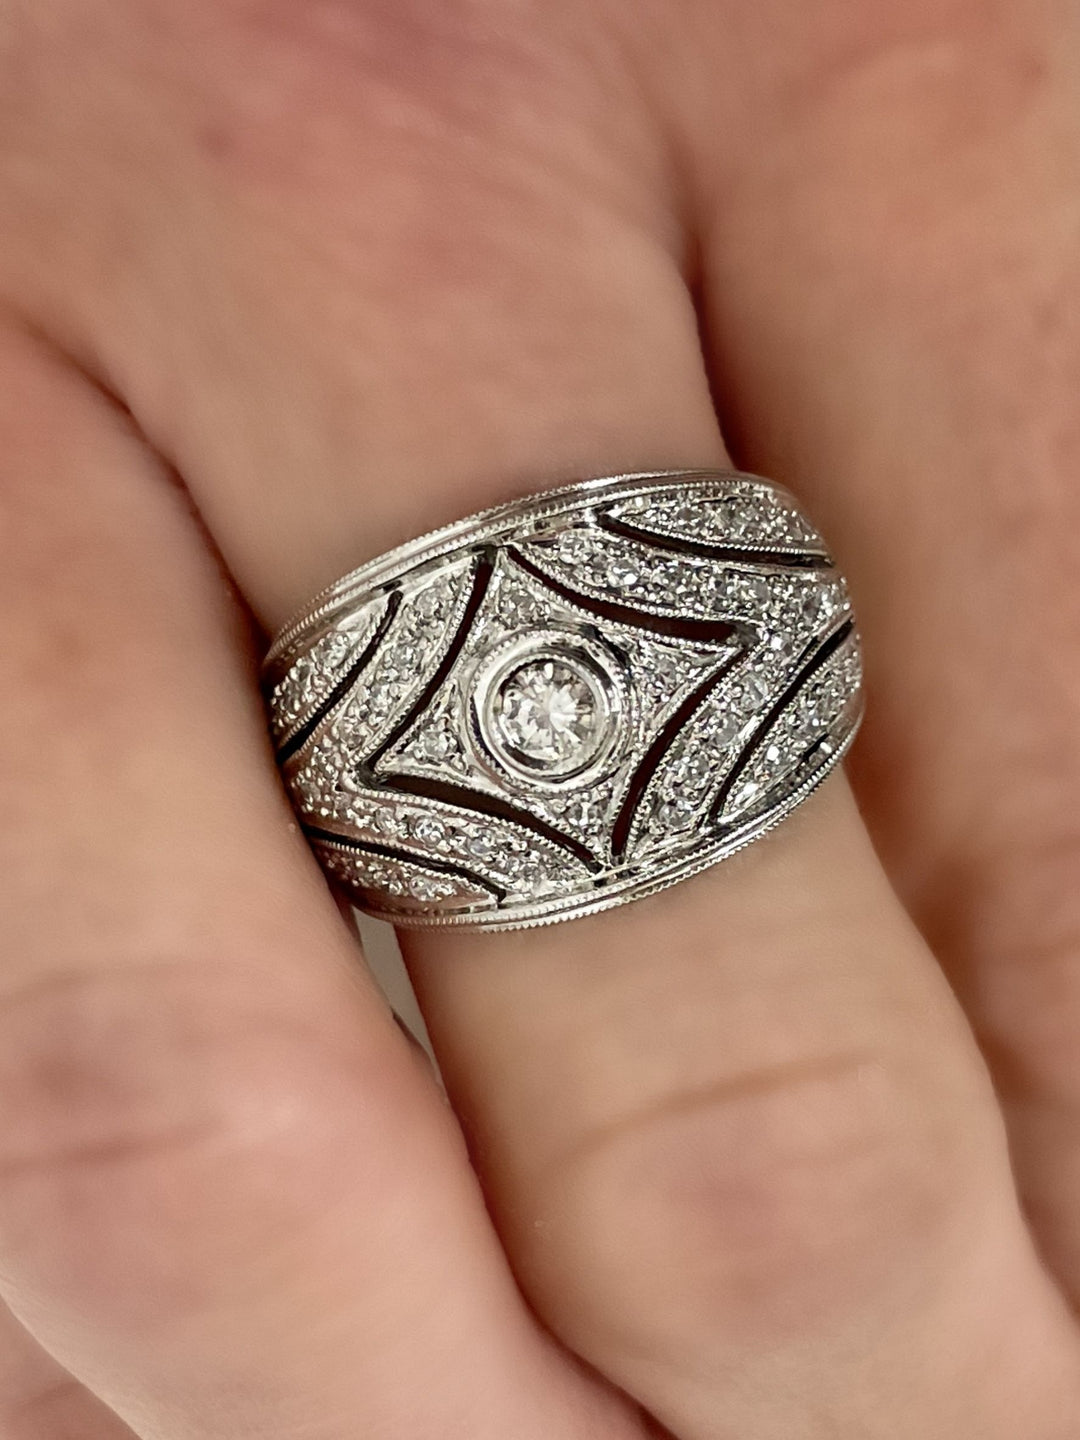 vintage inspired ring on finger